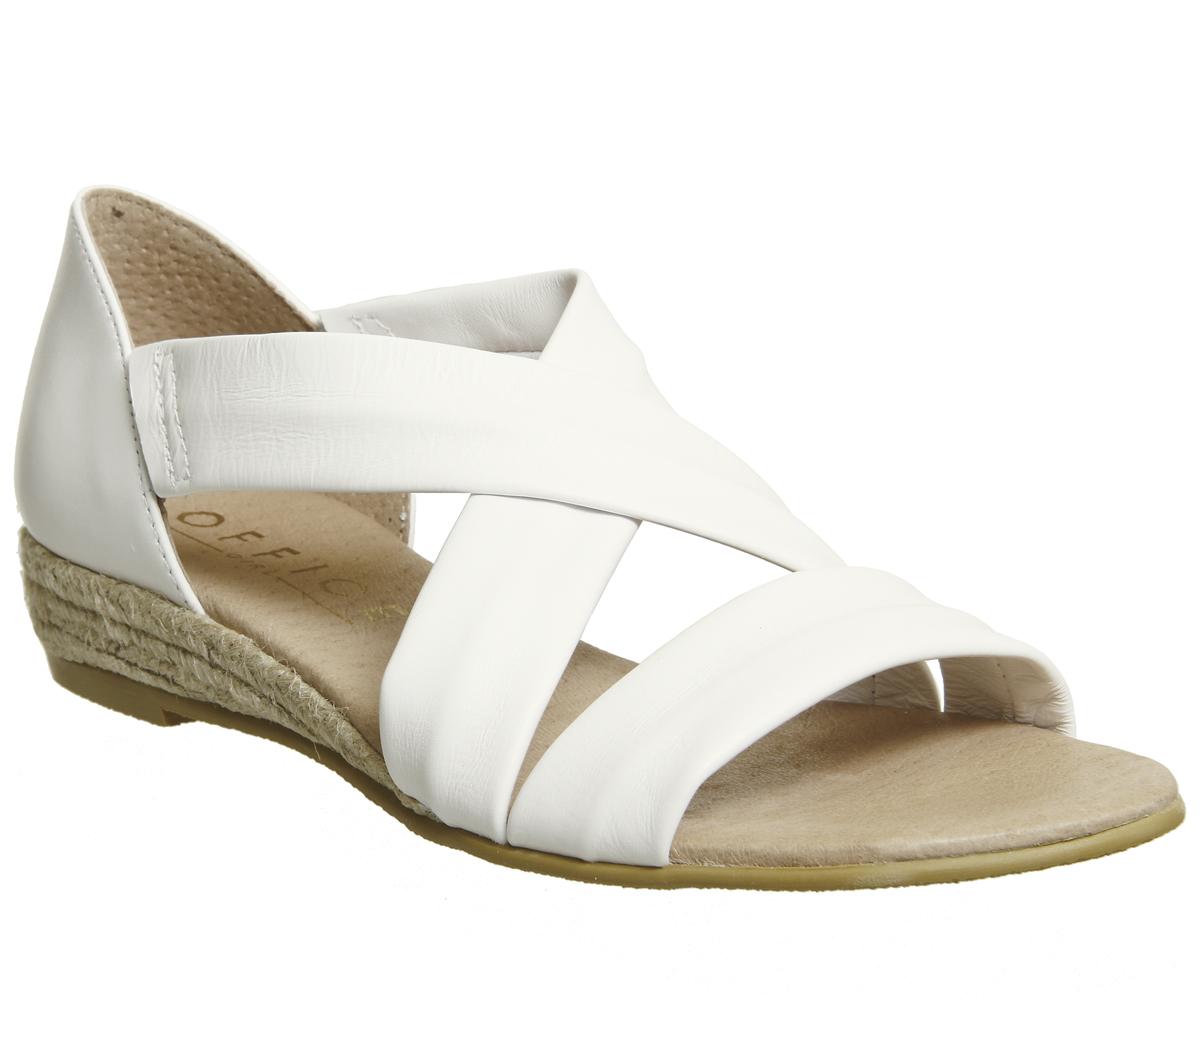 Office Hallie Cross Strap Espadrilles White Leather - Women’s Sandals